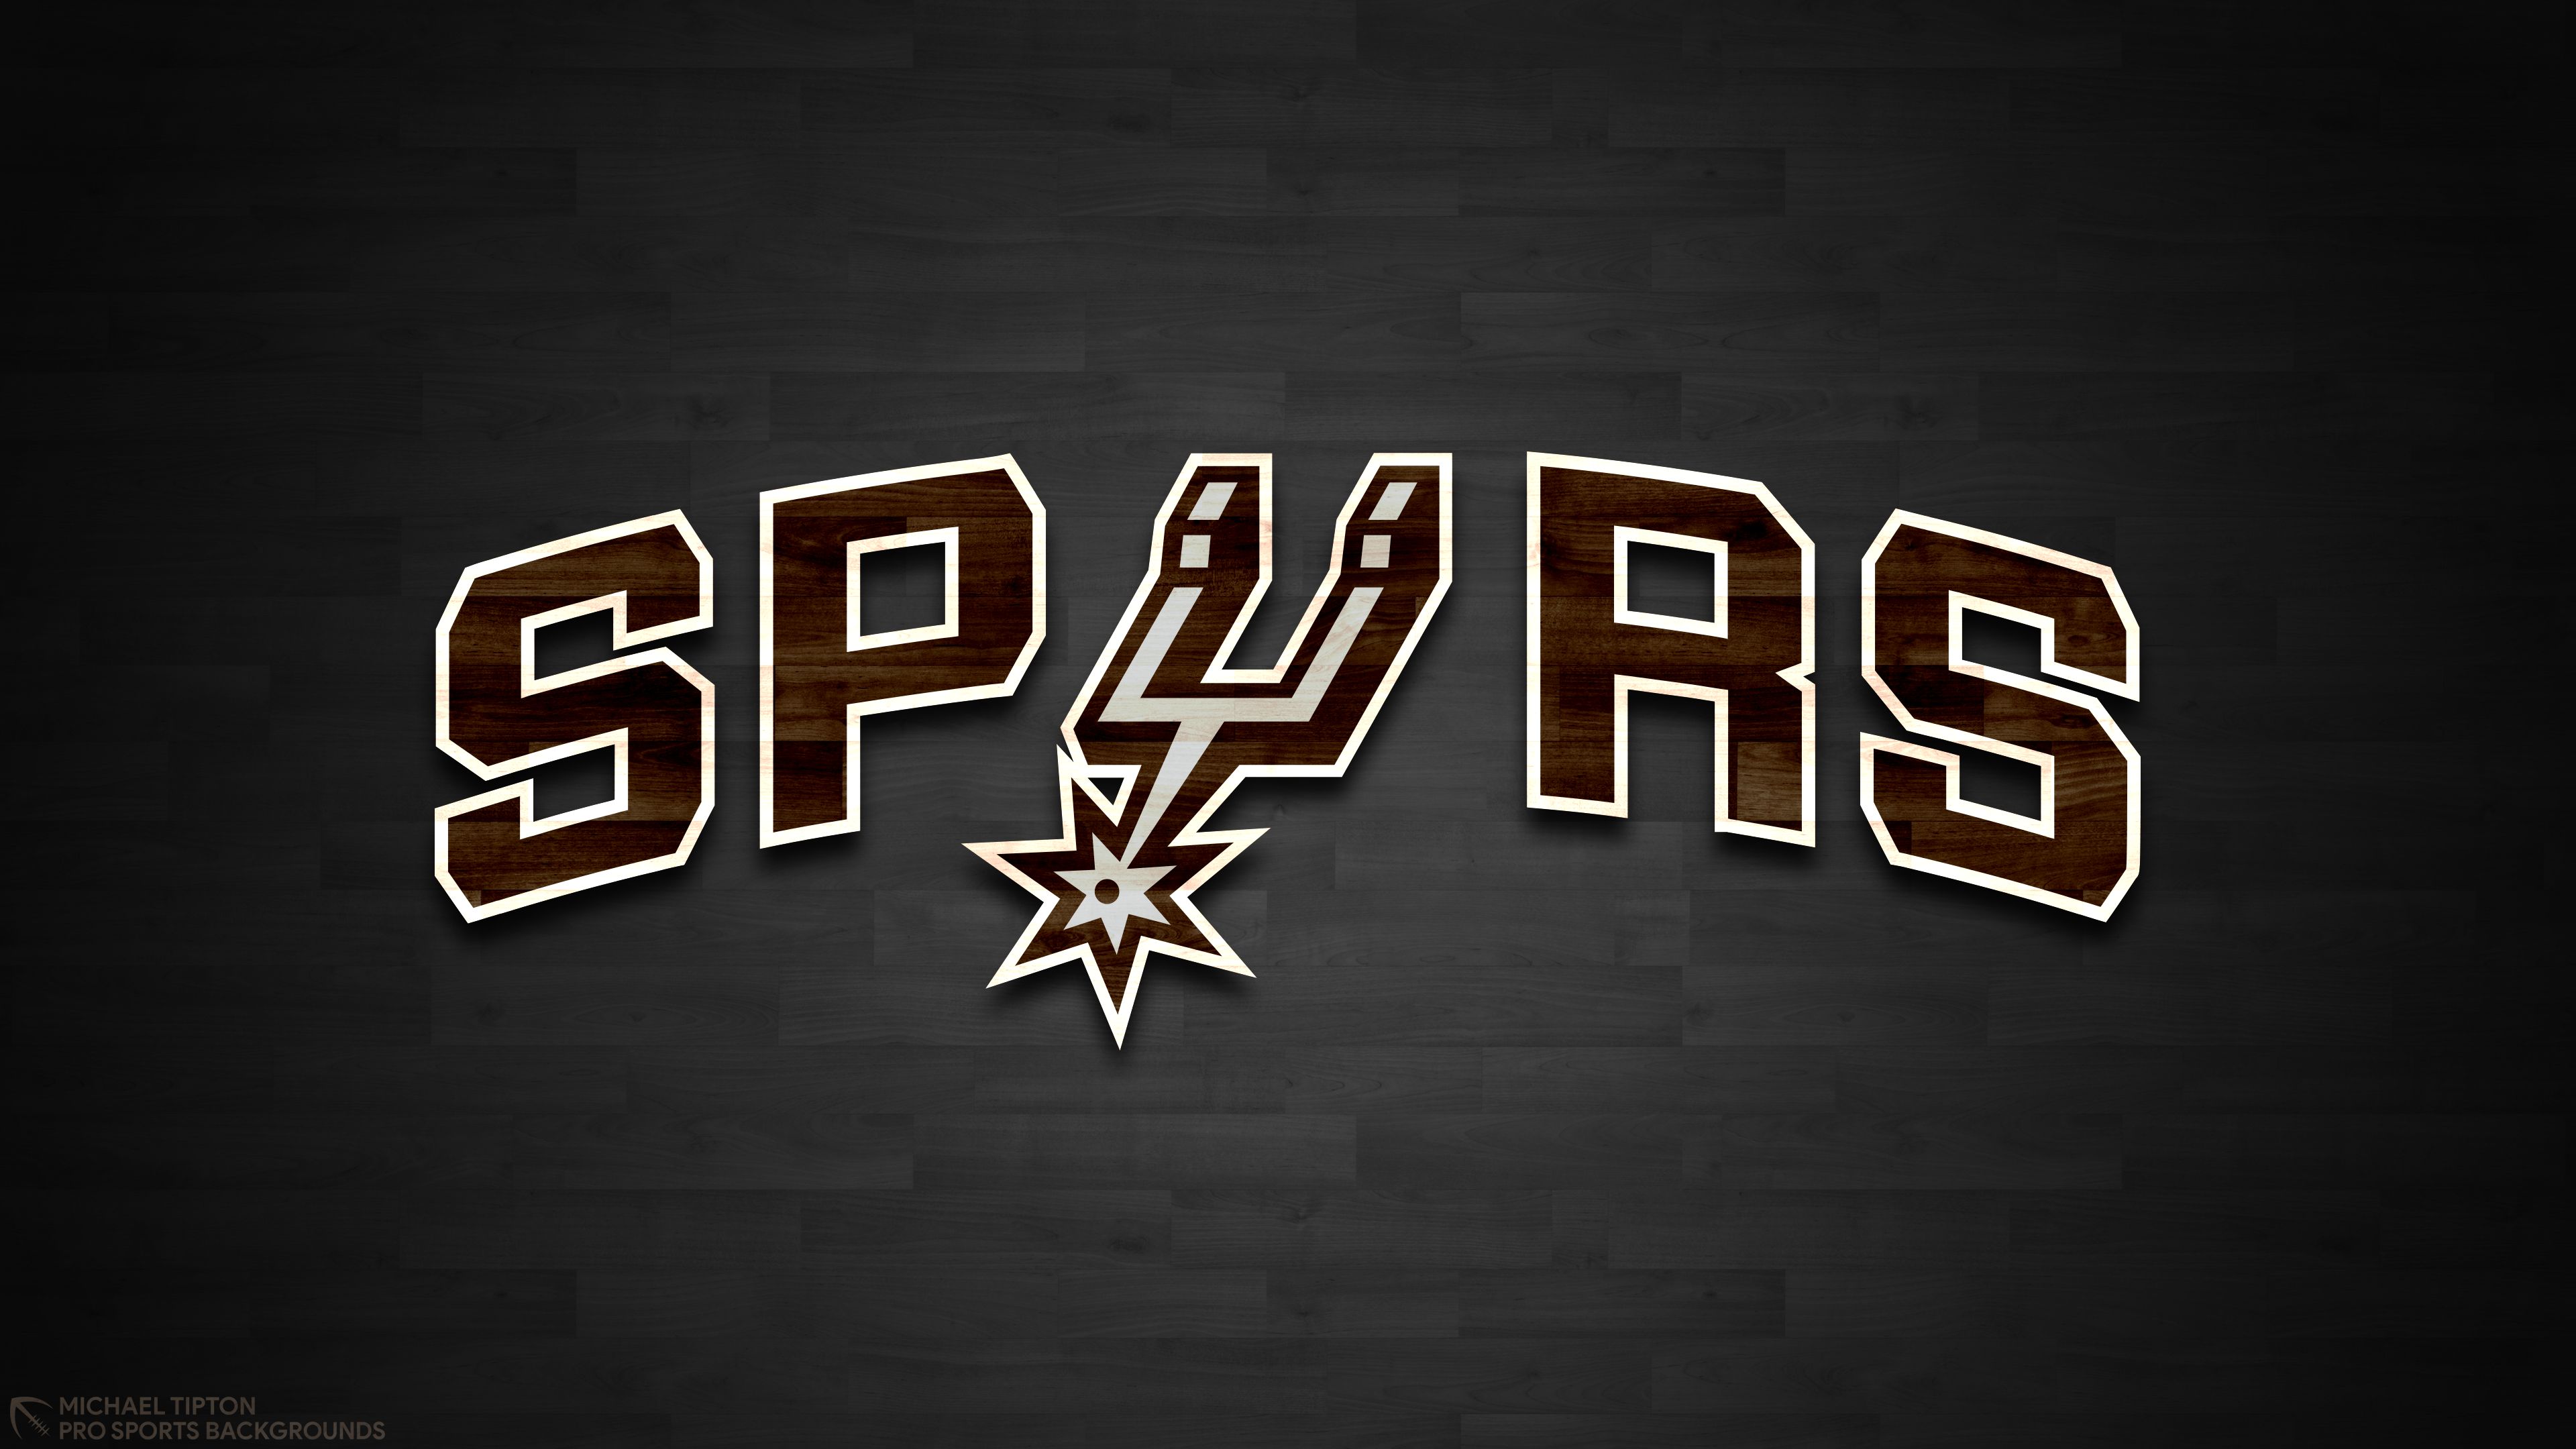 Download San Antonio Spurs Basketball Team Wallpaper